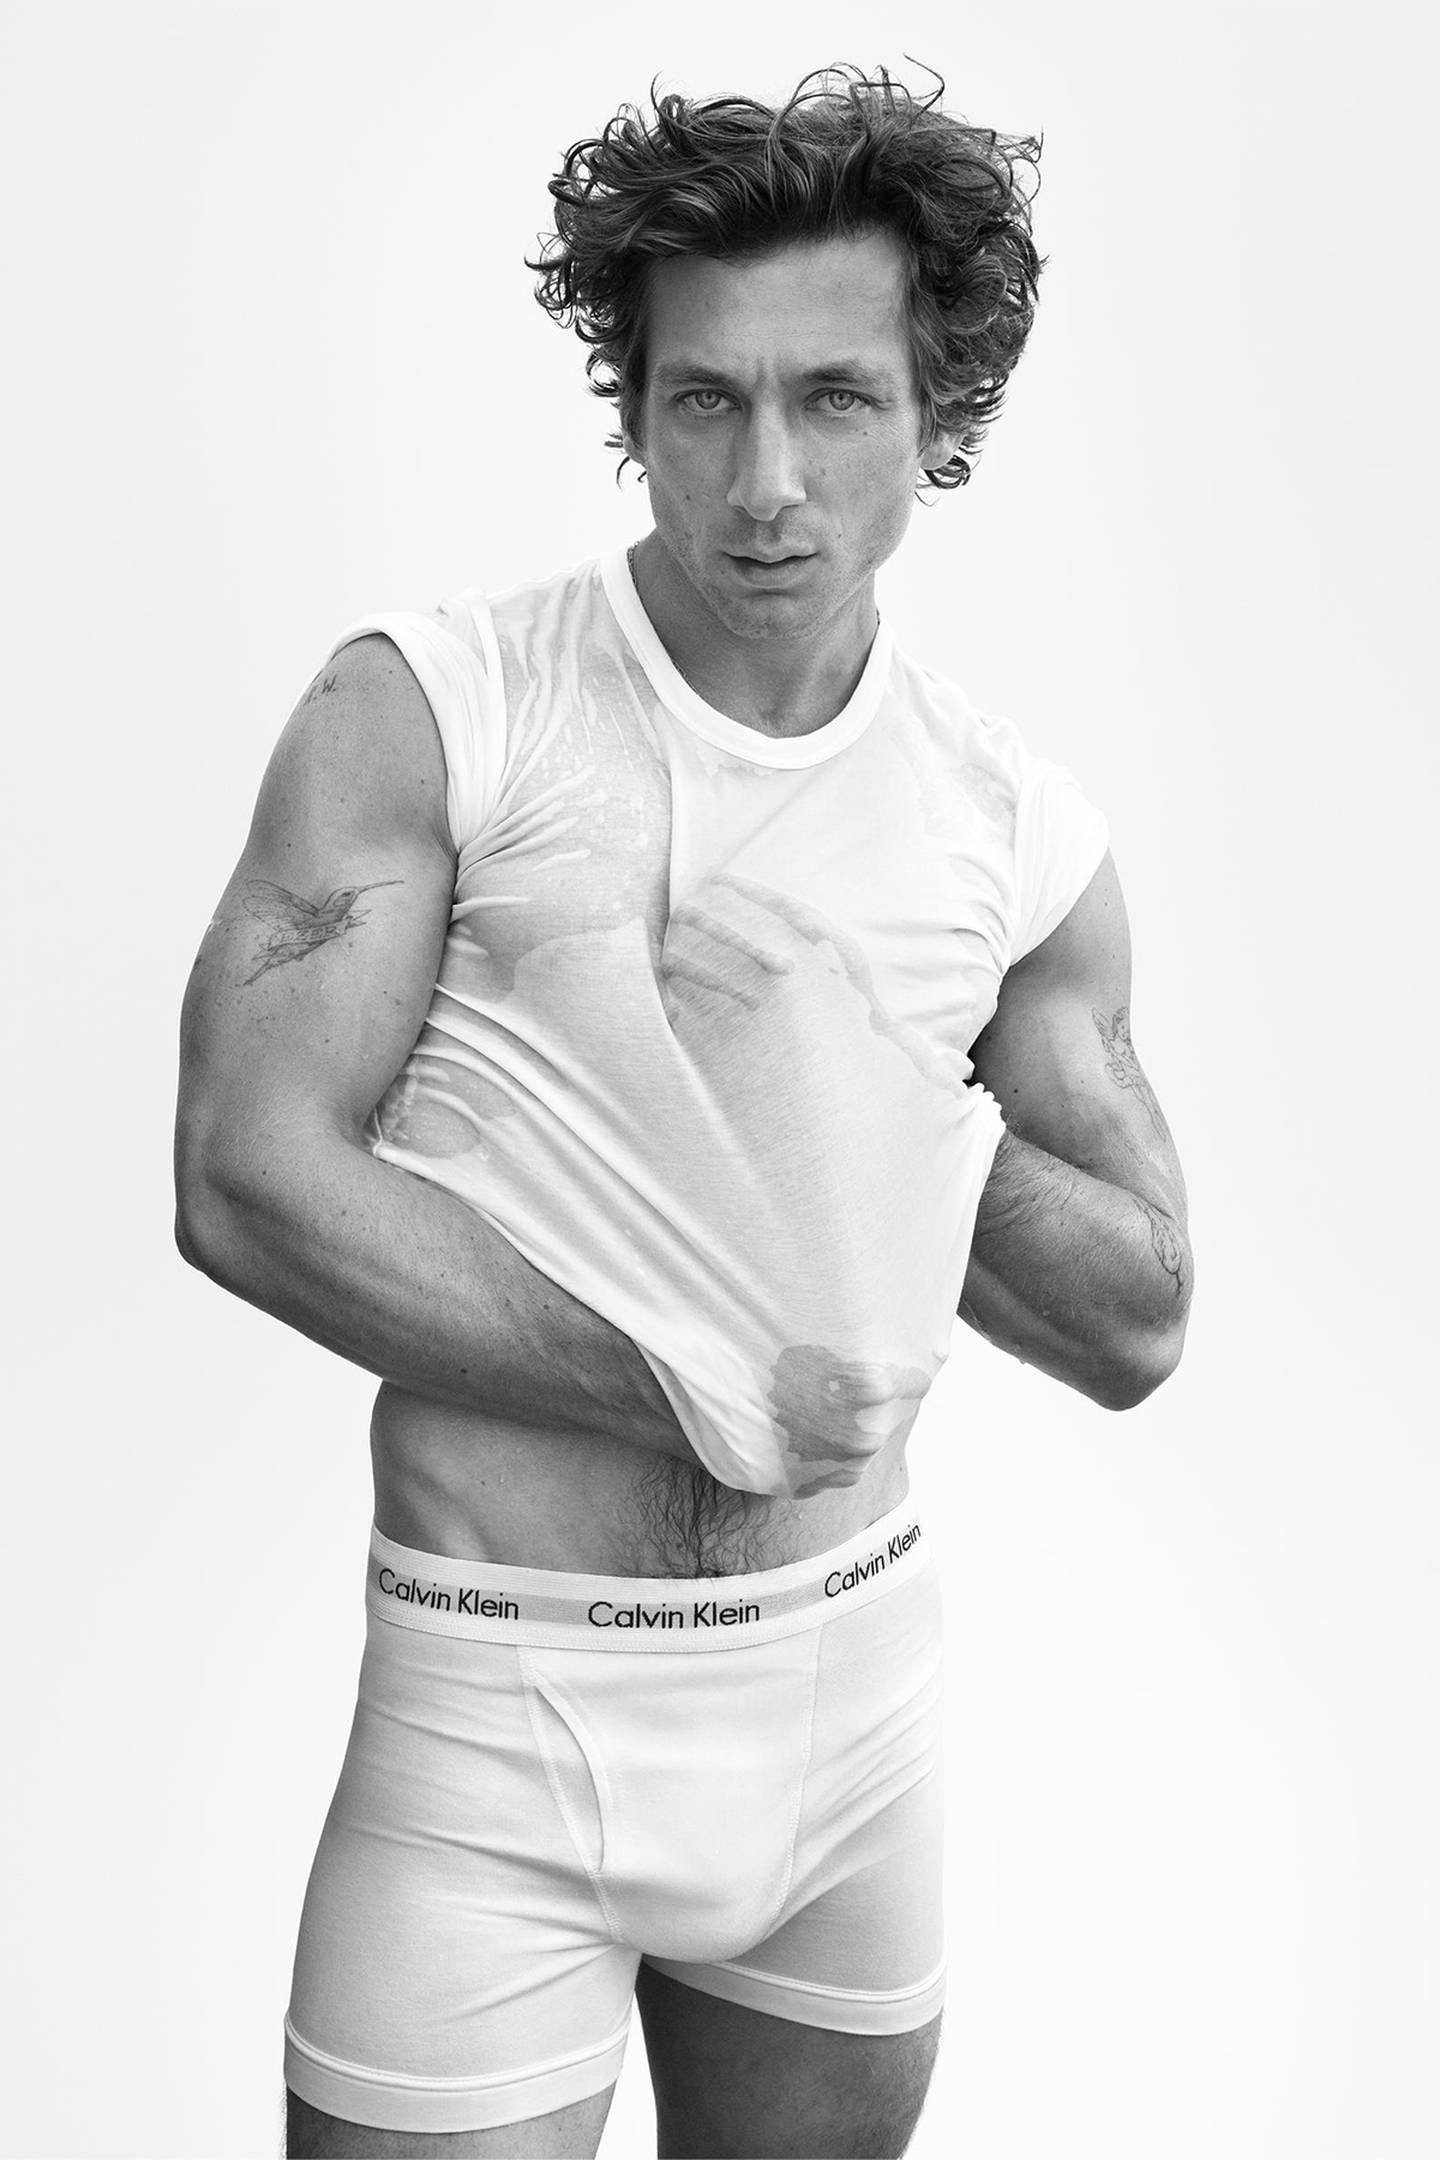 Calvin Klein tapped Jeremy Allen White for its latest underwear campaign.